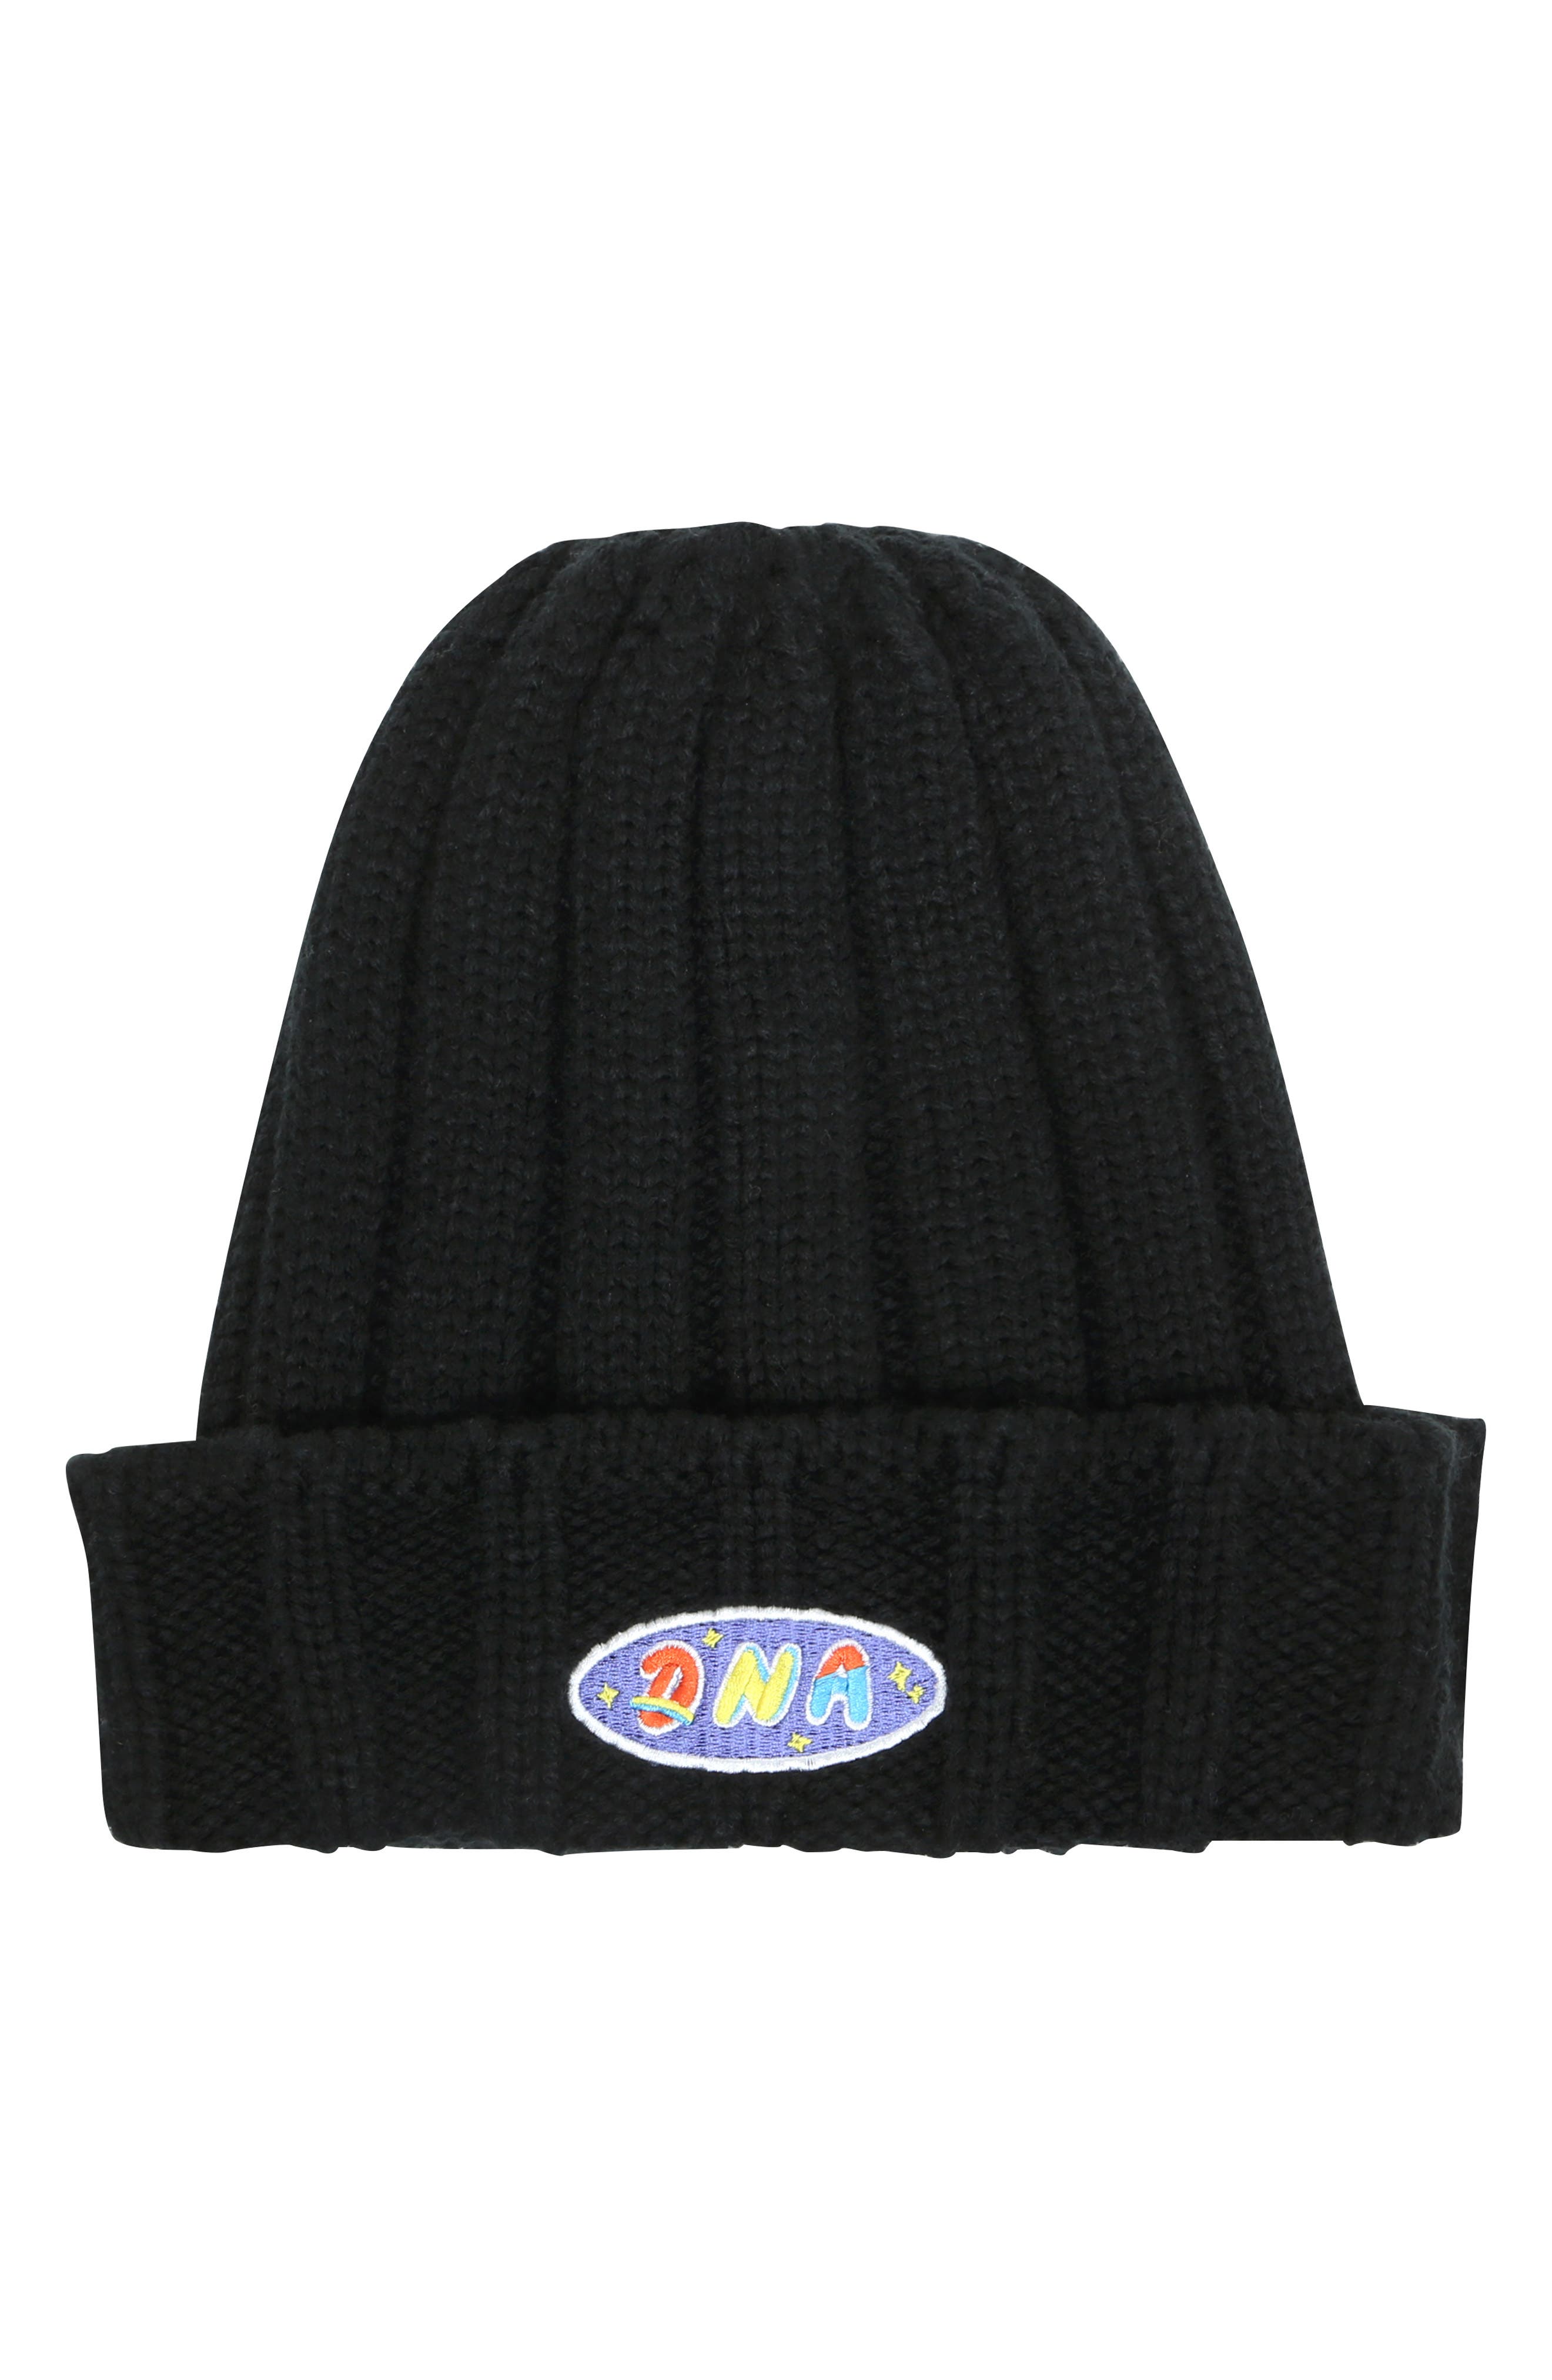 Mens and Womens Skullies Beanies Cougar Pride Classic Toboggan Hat Sports & Outdoors Warm Hat Black